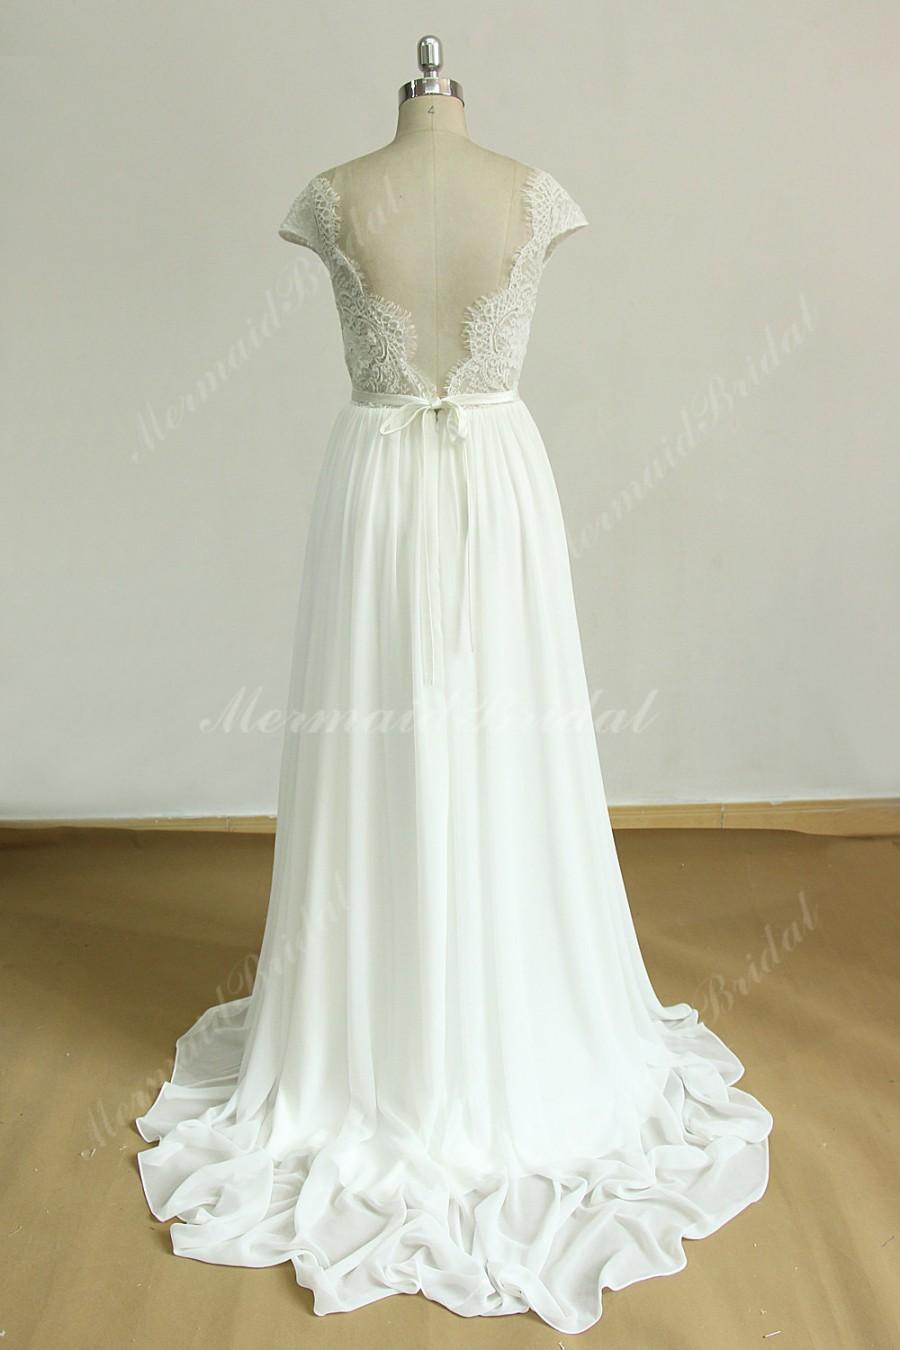 زفاف - Scallop backless chiffon lace wedding wedding dress with removable satin sash and capsleeves